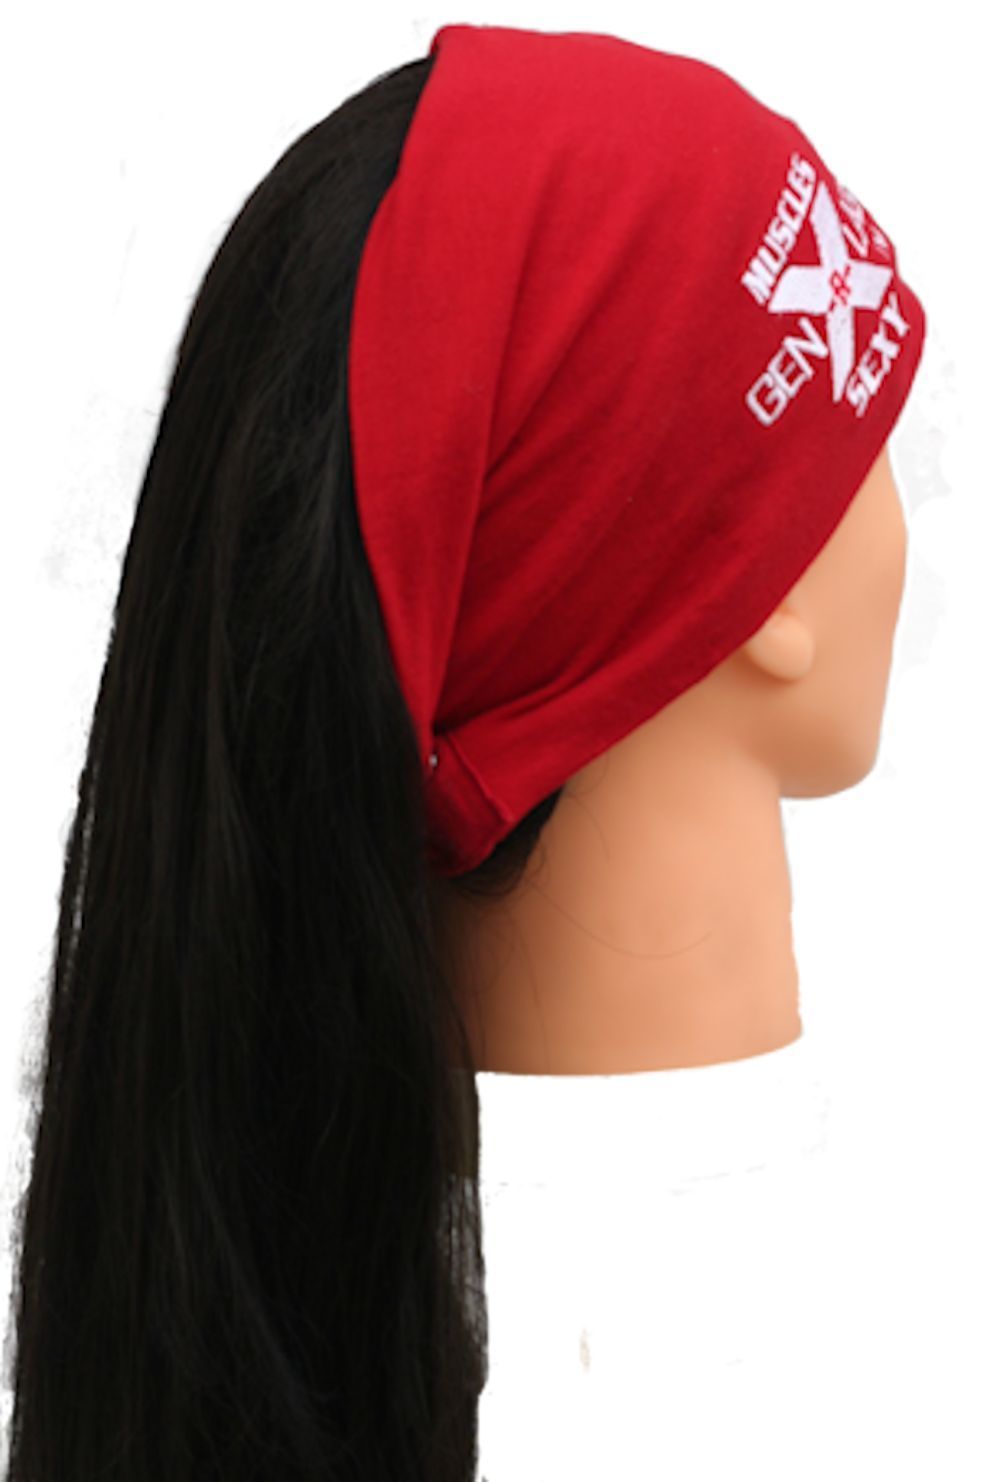 GenXLabs Accessories Beannie Red GenXLabs Workout Cotton Hair Beanie  Red